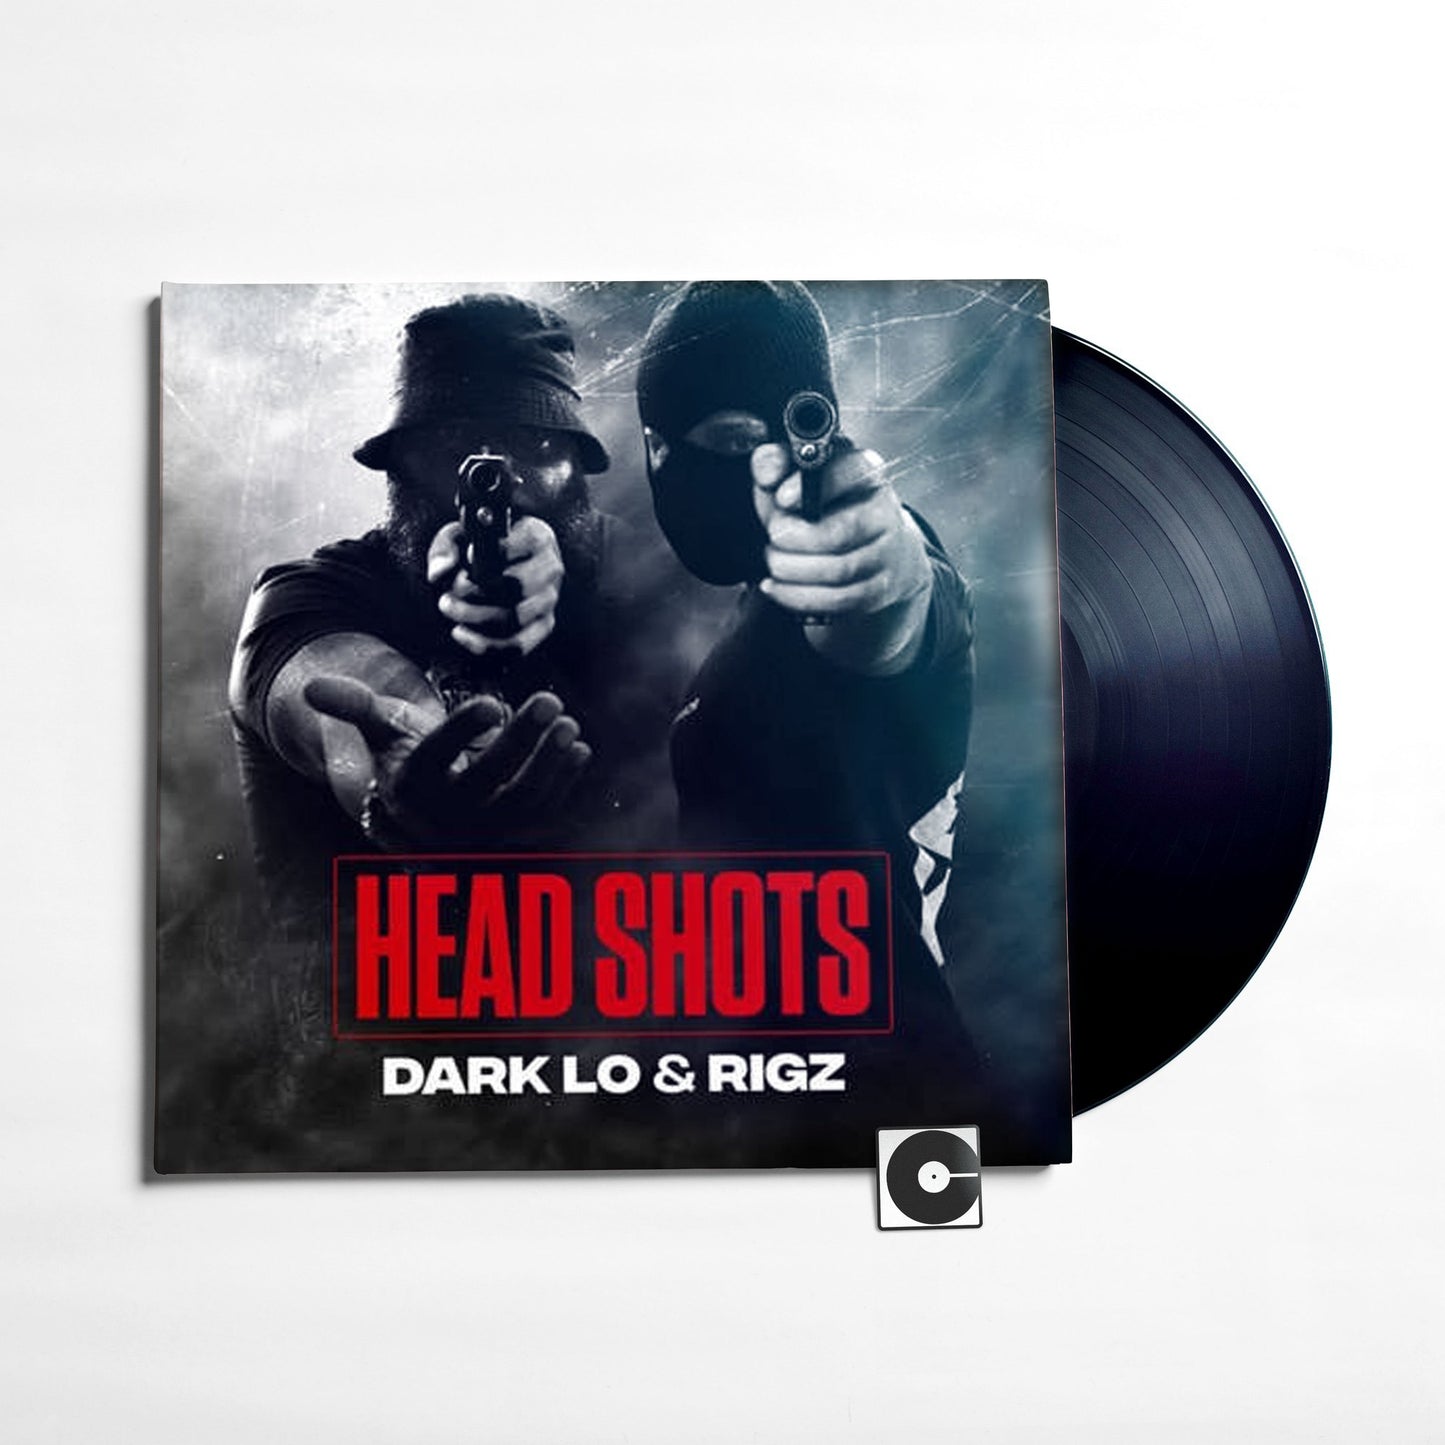 Dark Lo And Rigz - "Head Shots"